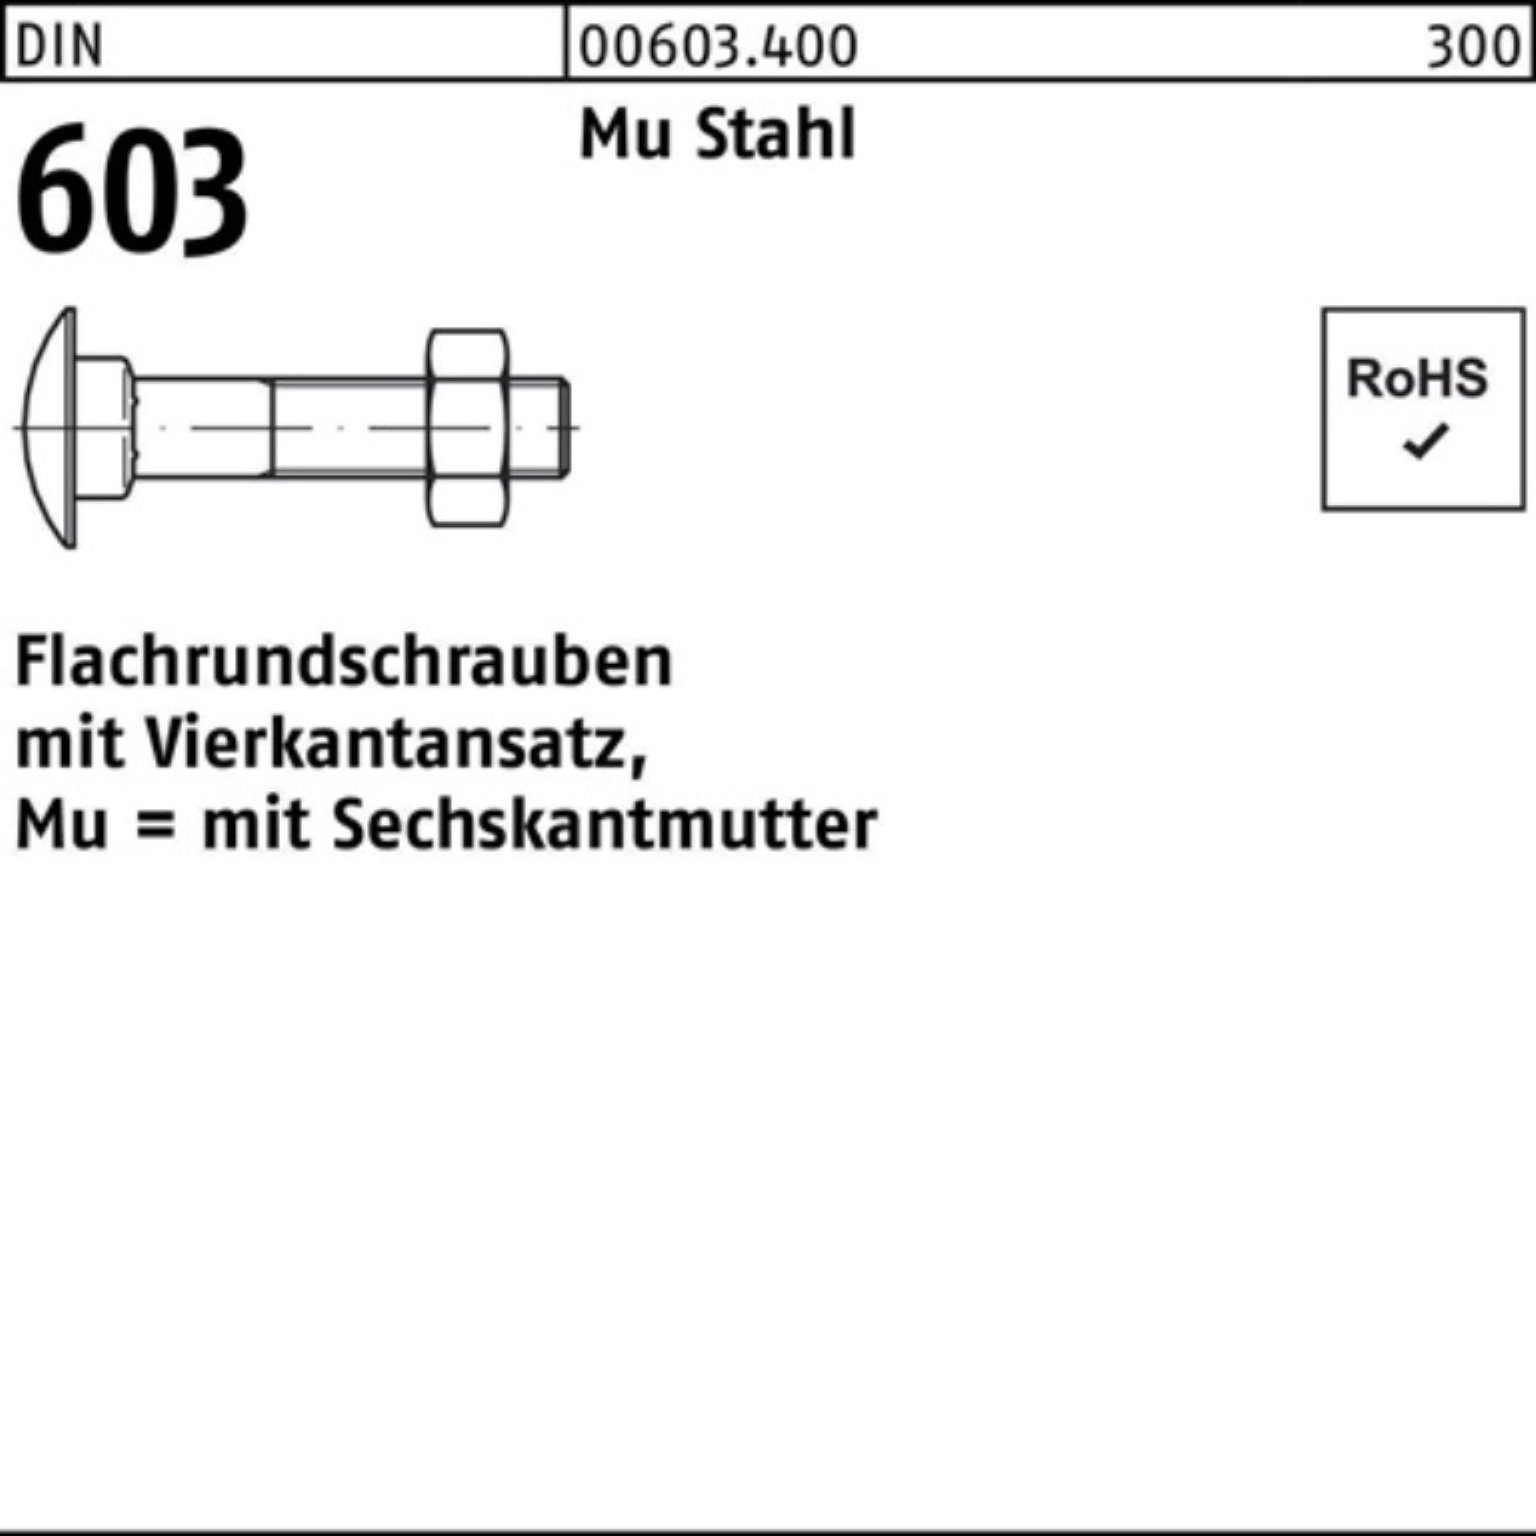 Reyher Schraube 200er Pack Flachrundschraube Vierkantansatz/6-ktmutter M5x45 603 M DIN